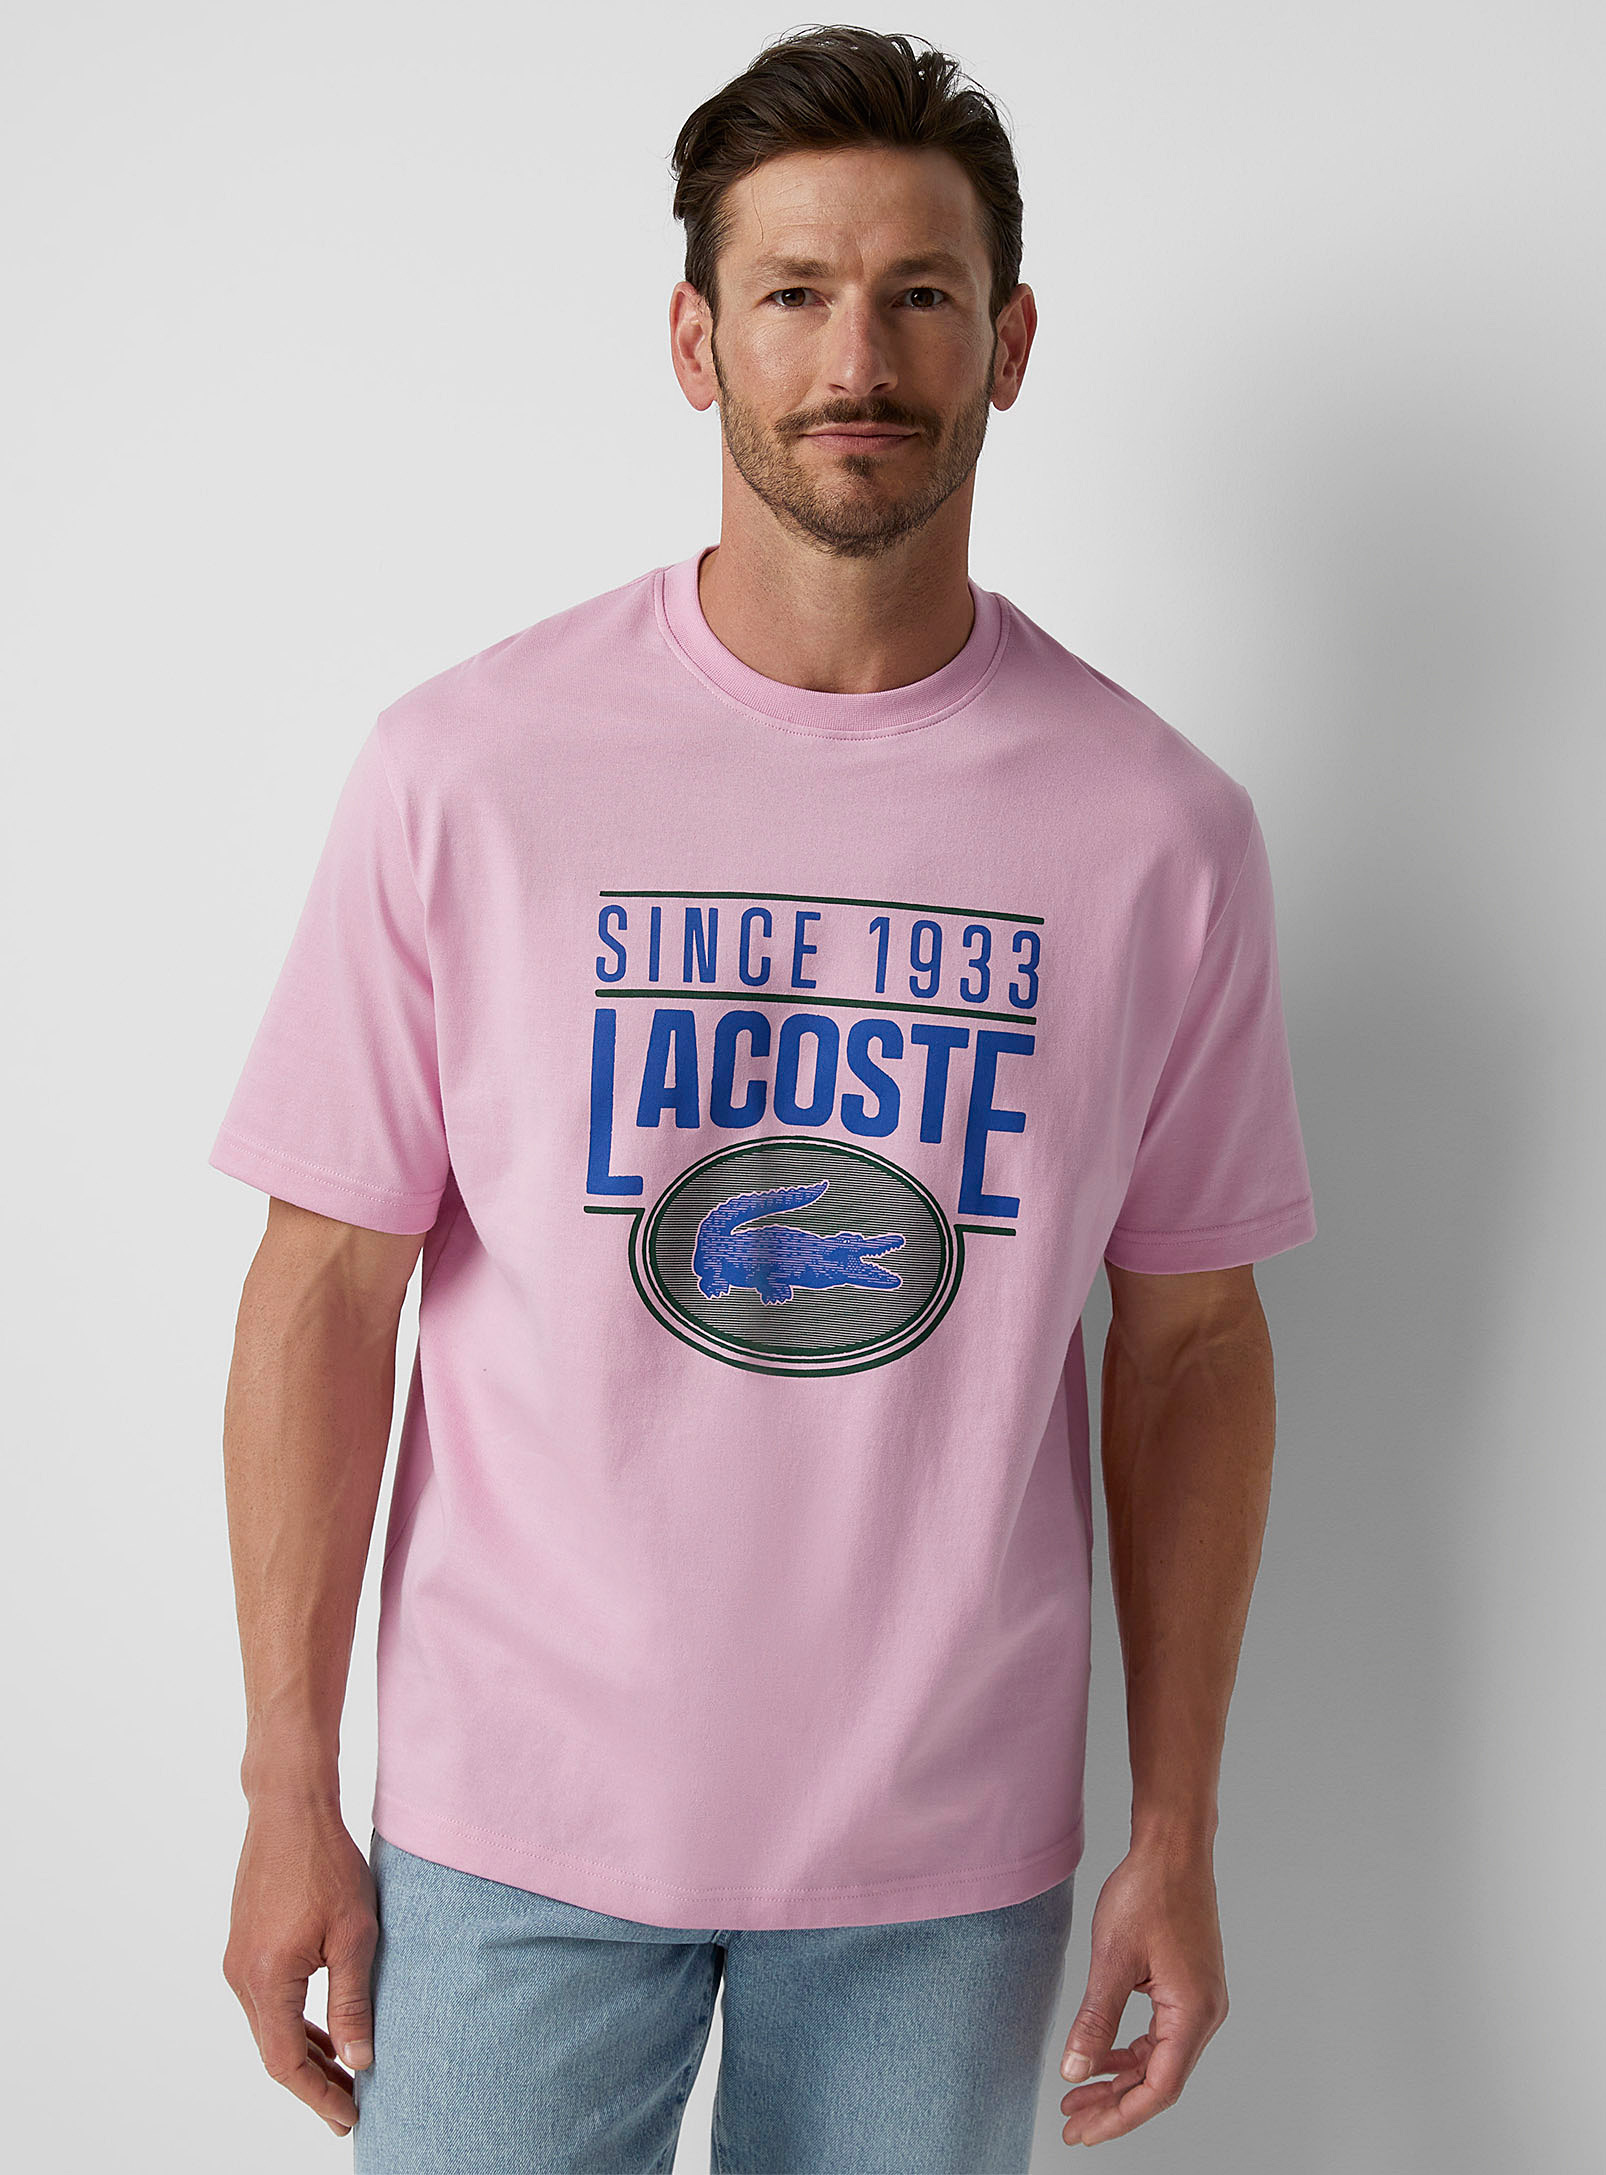 Lacoste - Men's Loose retro logo T-shirt